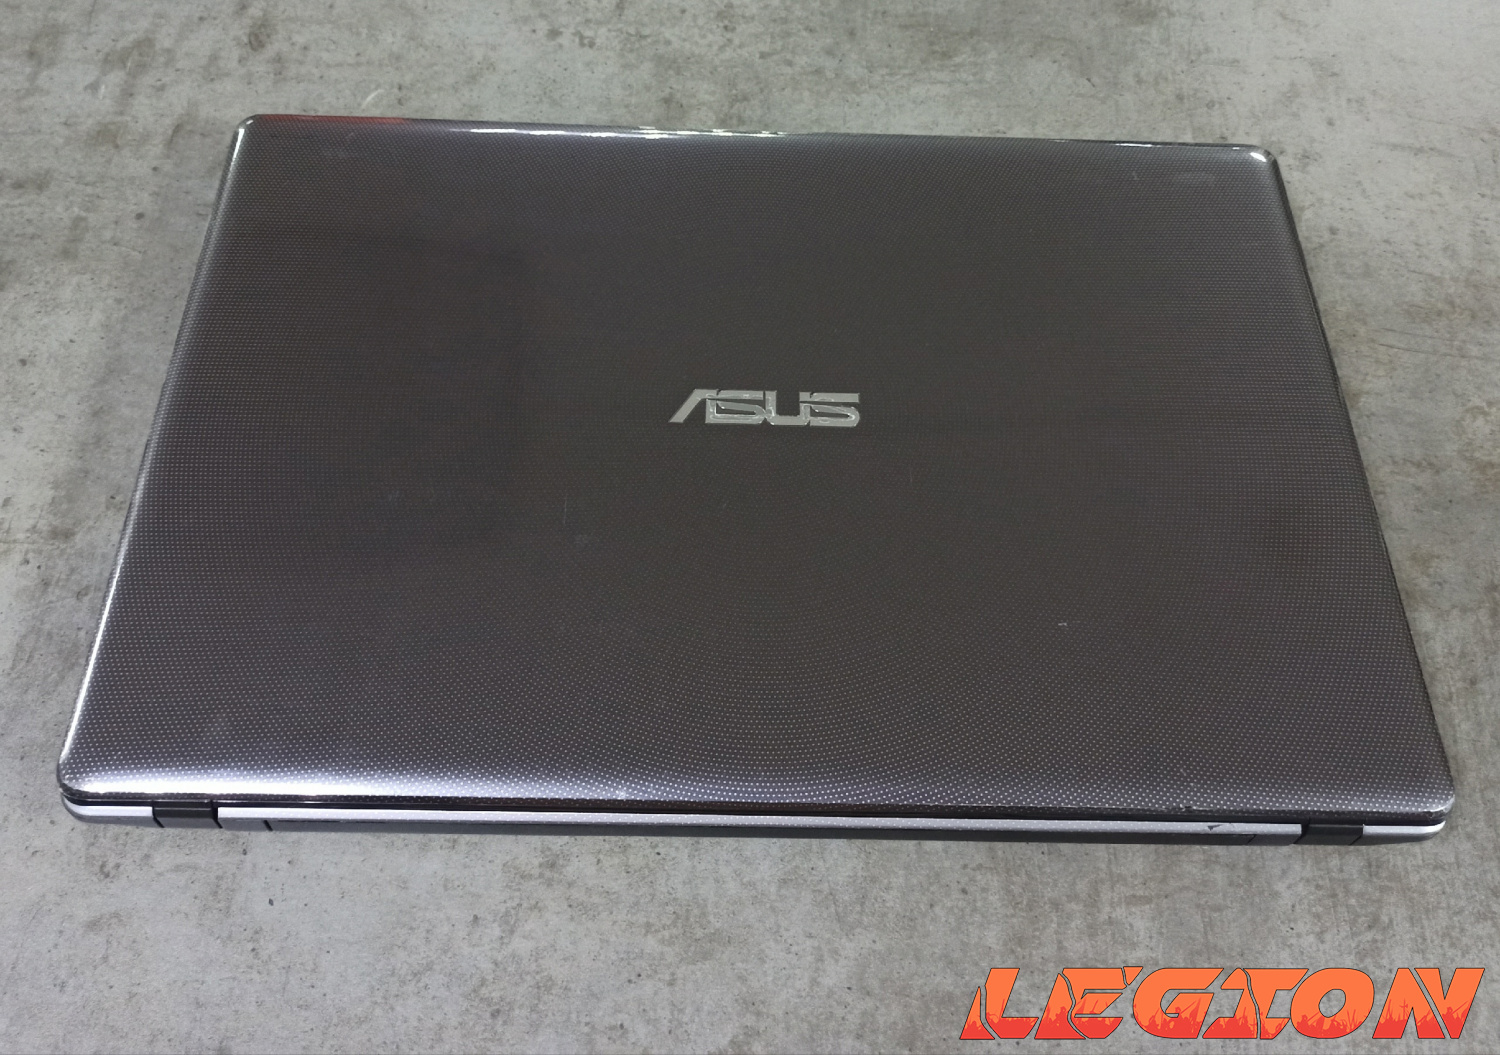 Asus i5 4200/6GB/GTX 950M/500GB/15.6 FullHD